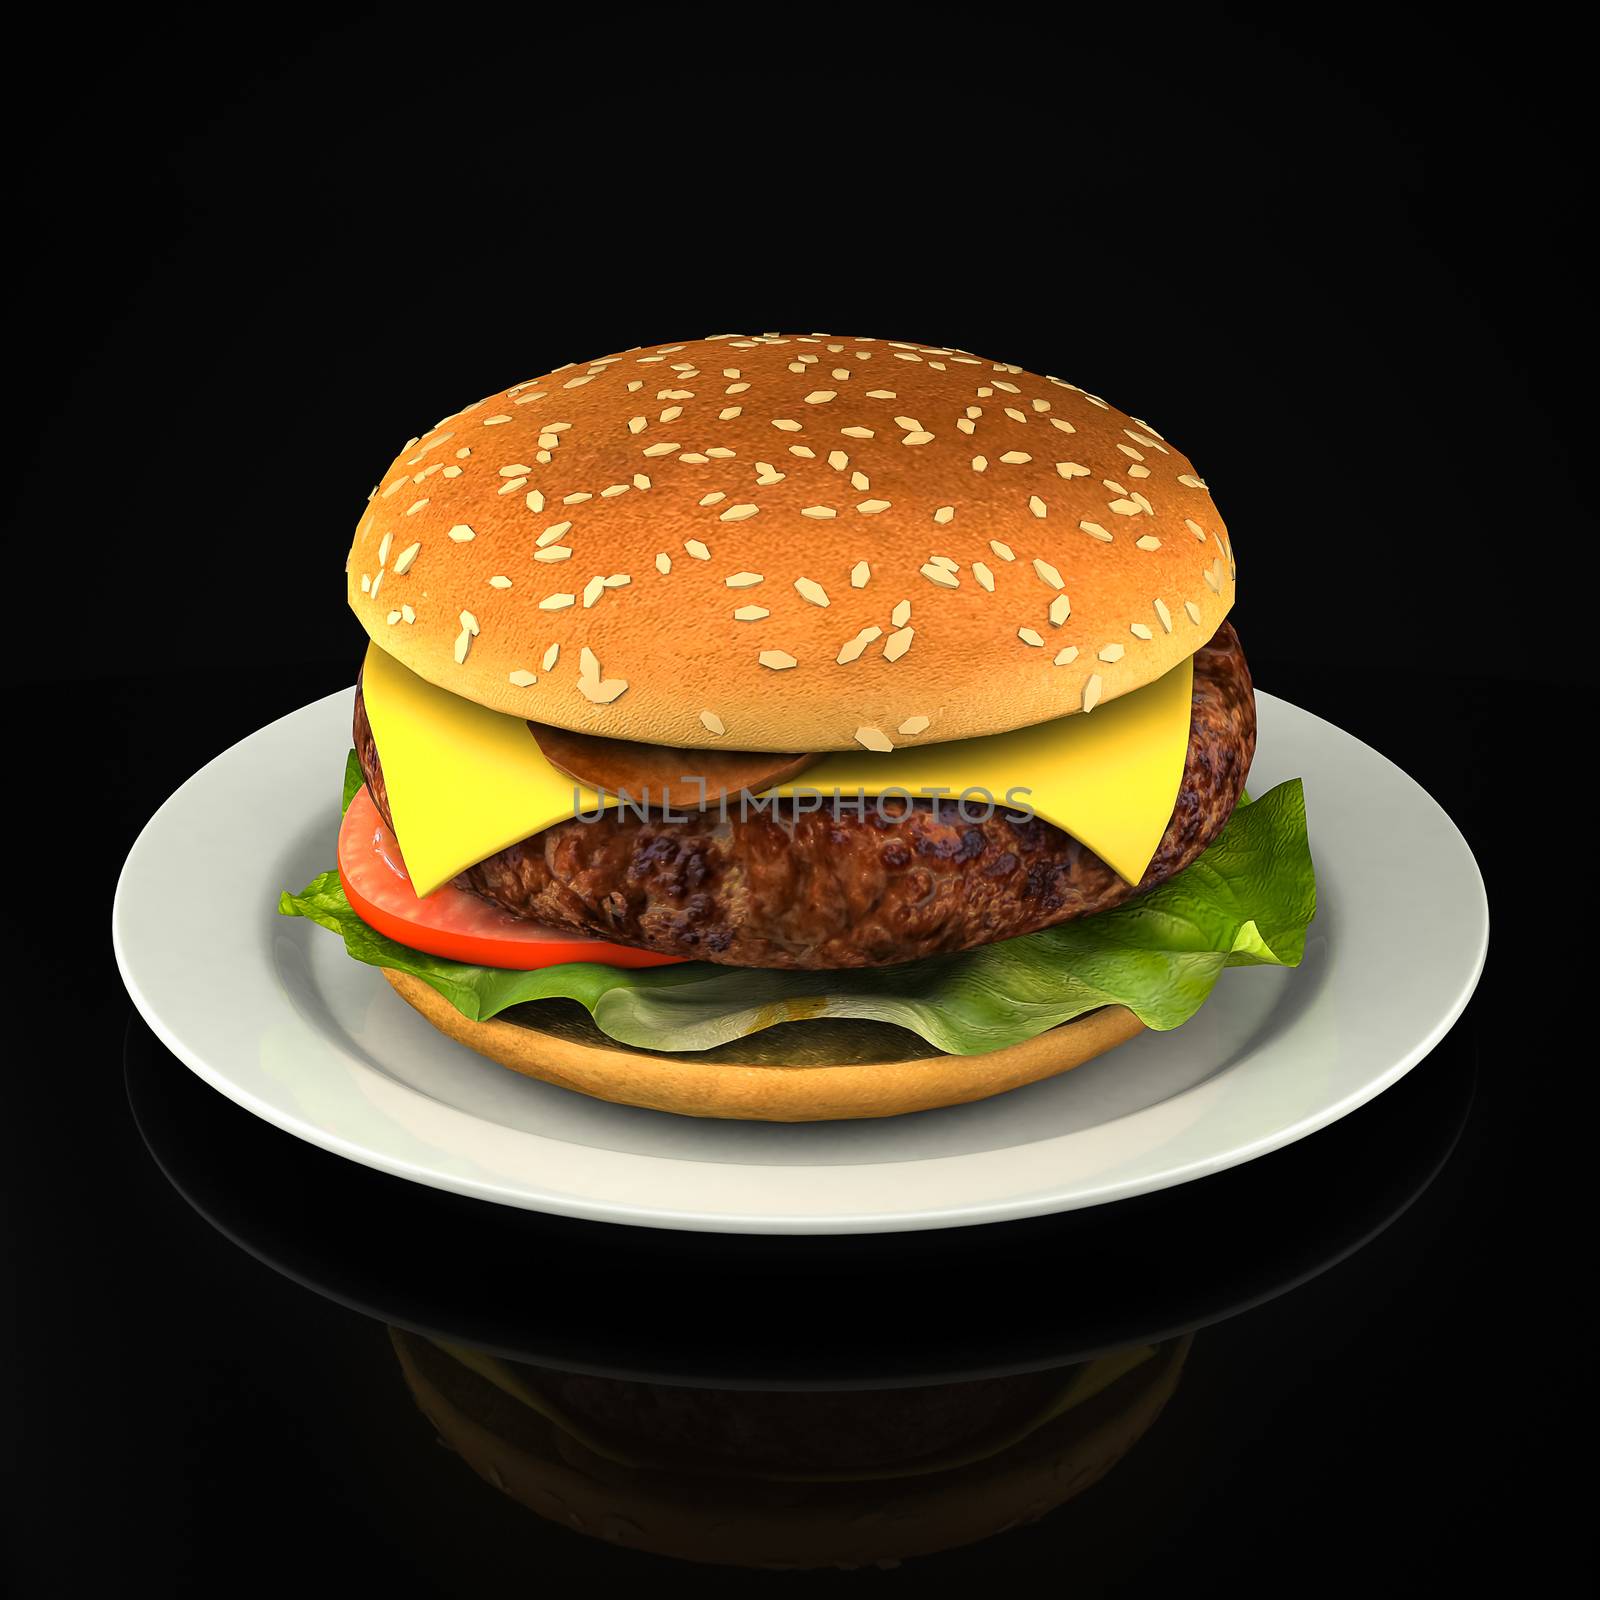 Big hamburger by mrgarry